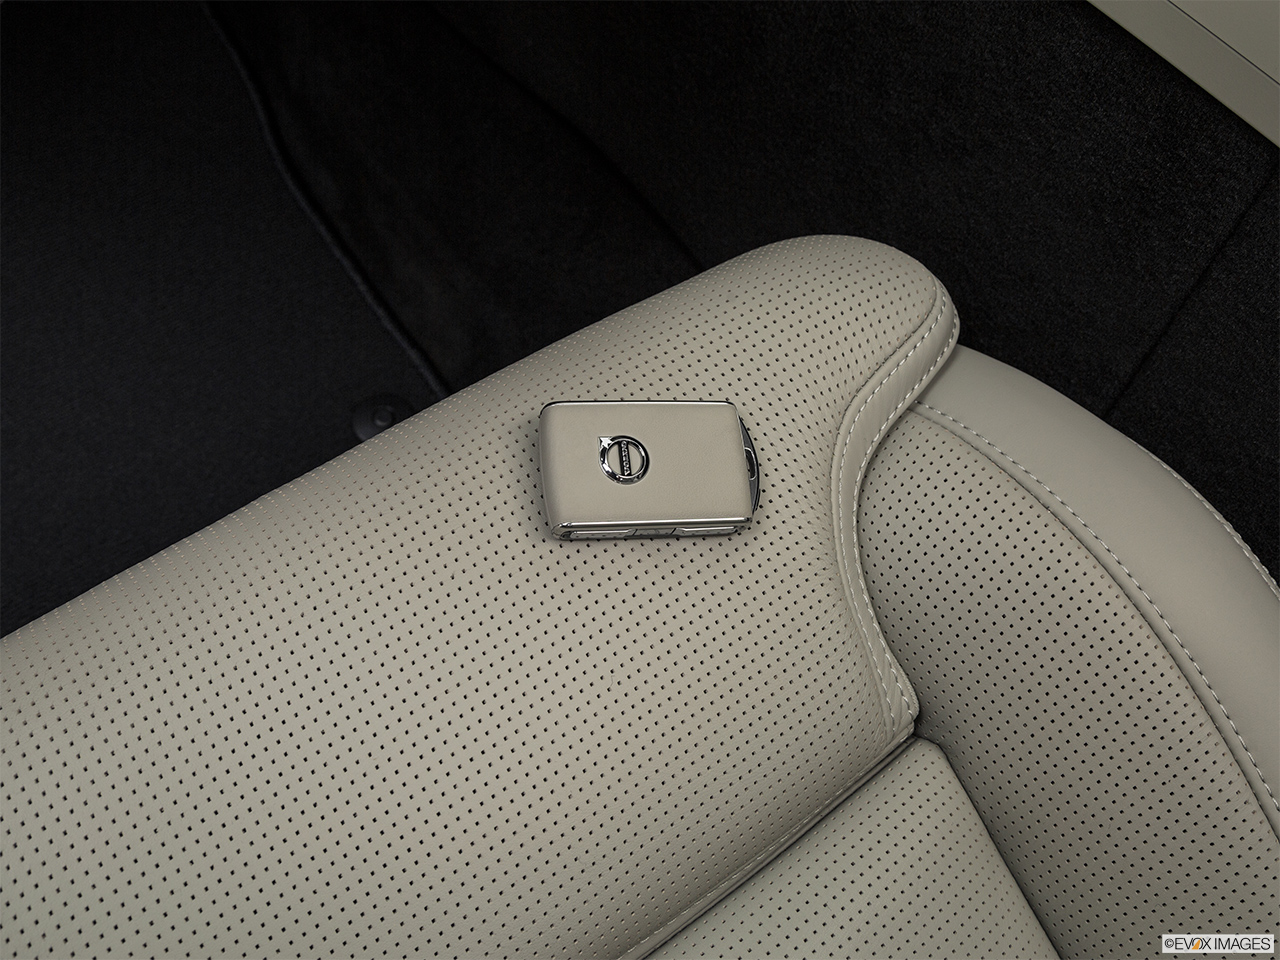 2019 Volvo XC60 T6 Inscription Key fob on driver's seat. 